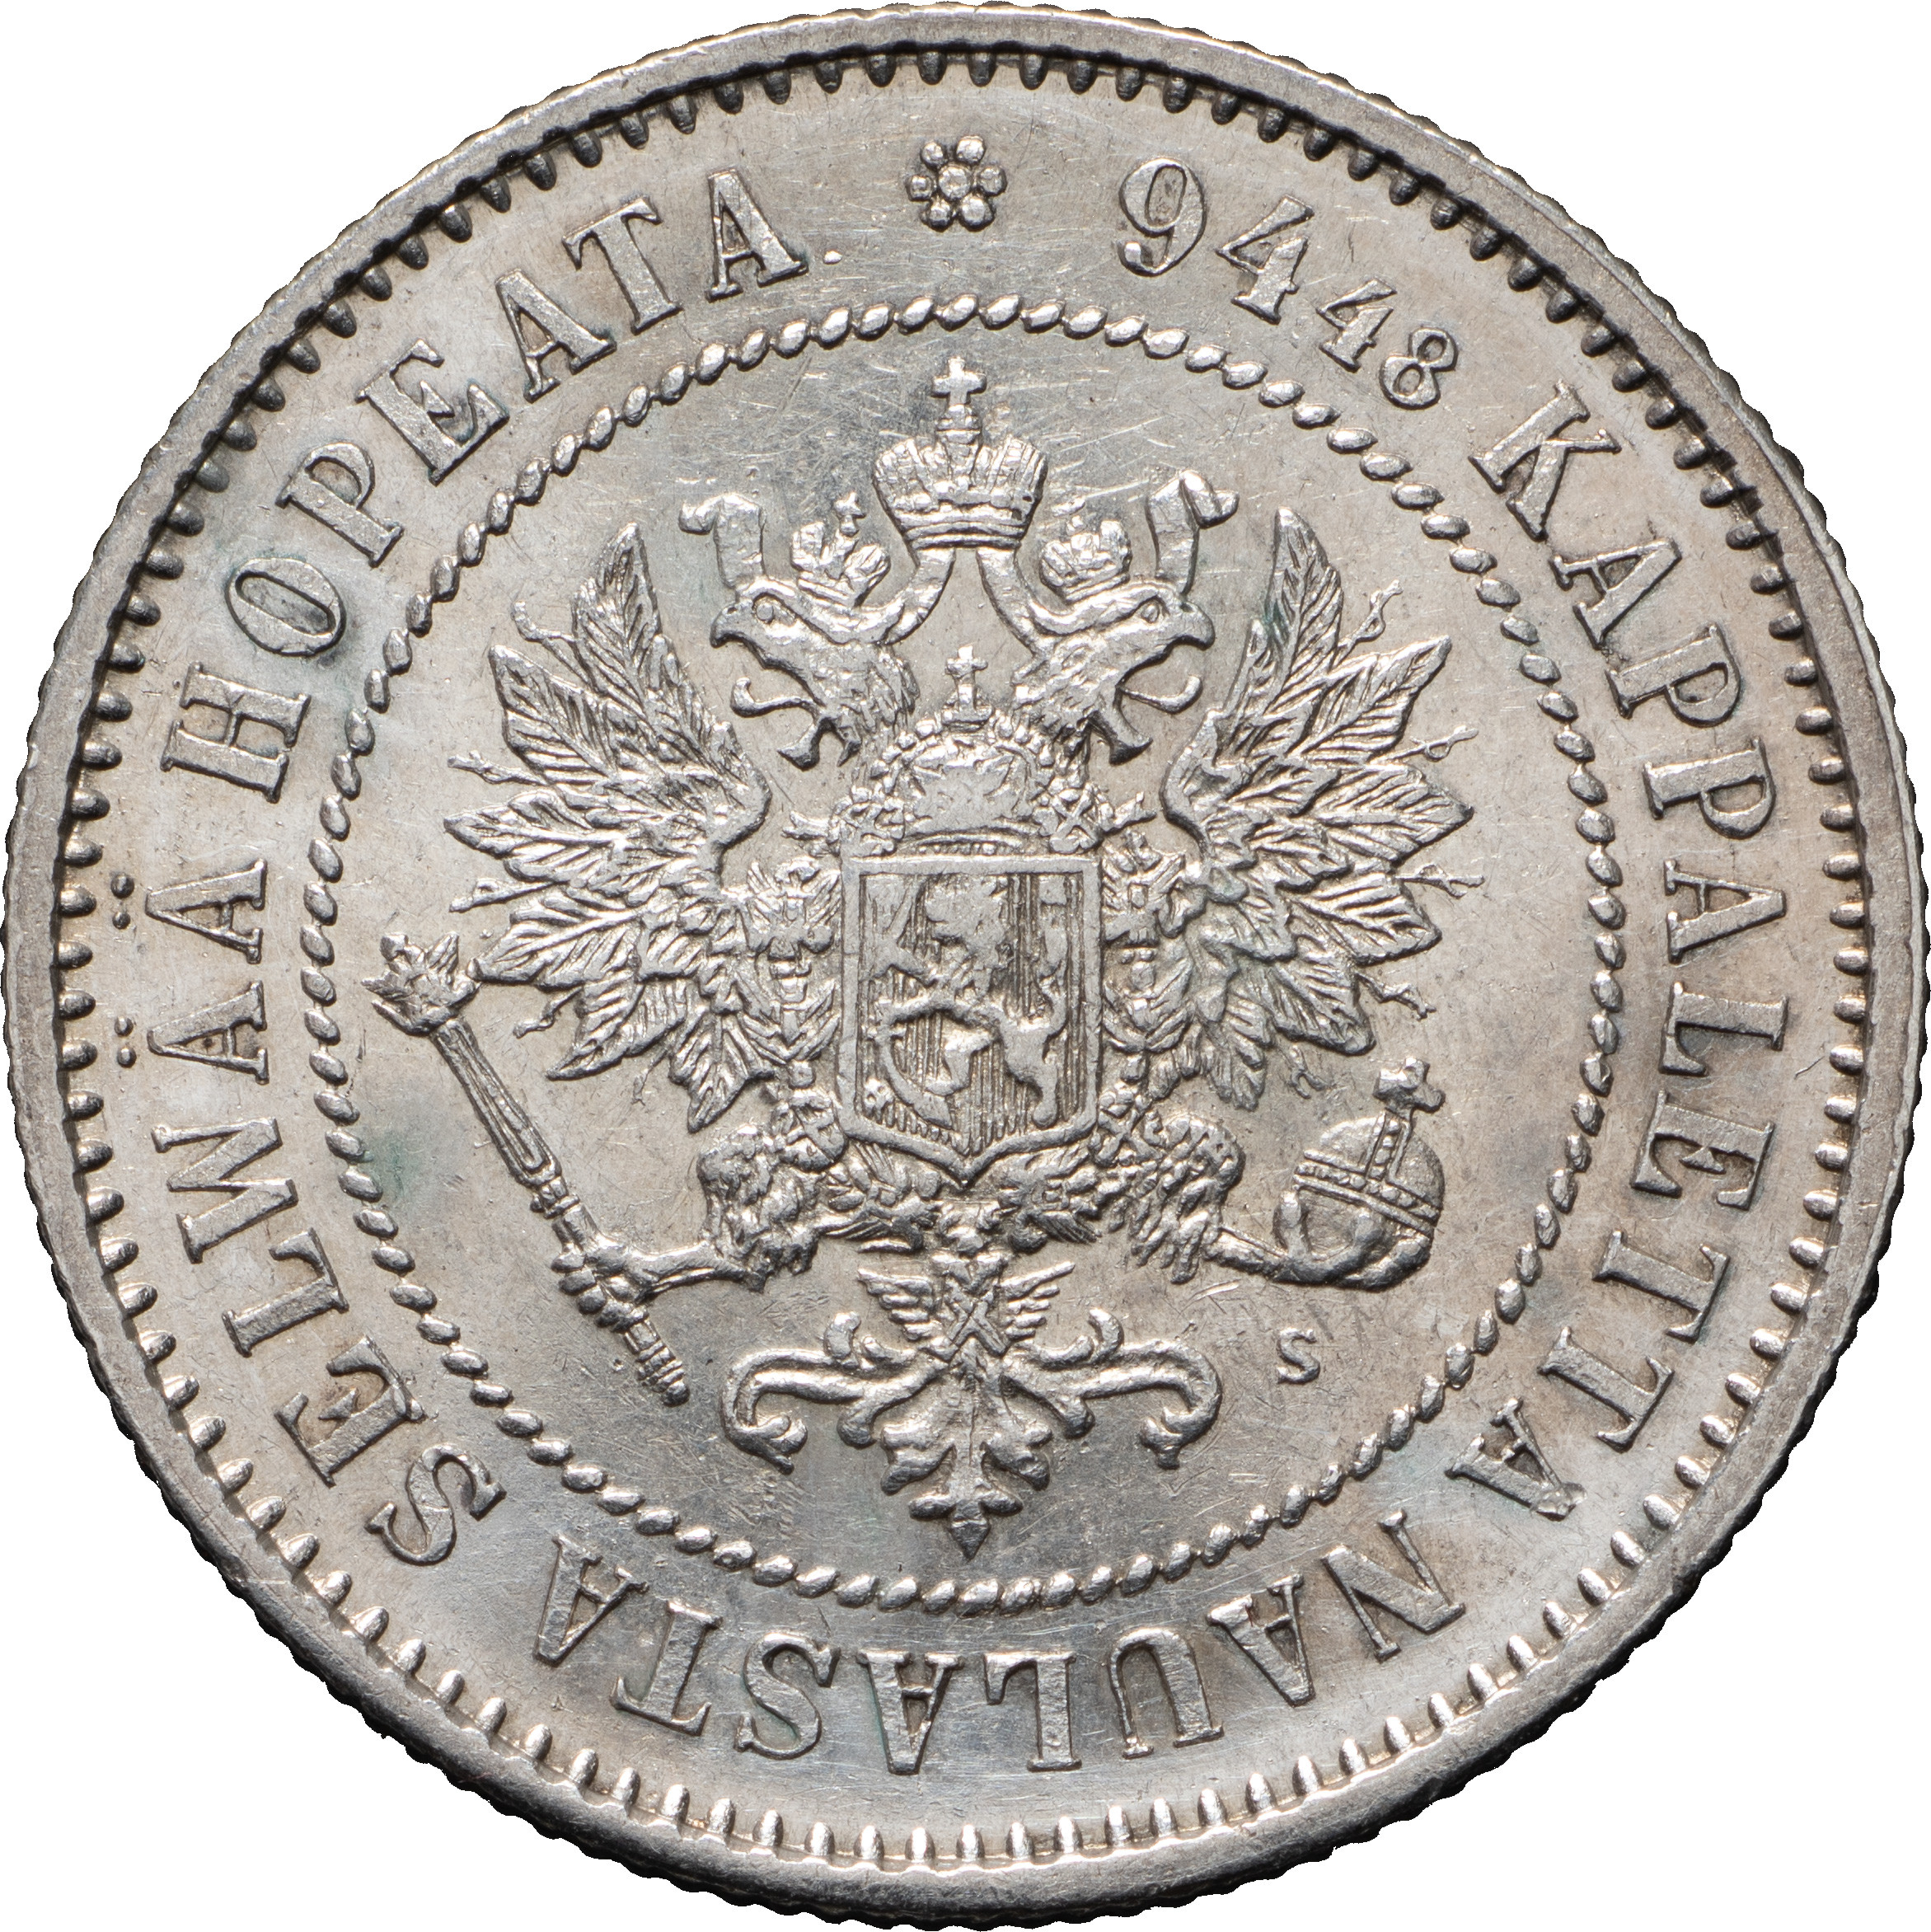 1 марка 1872 года S Для Финляндии